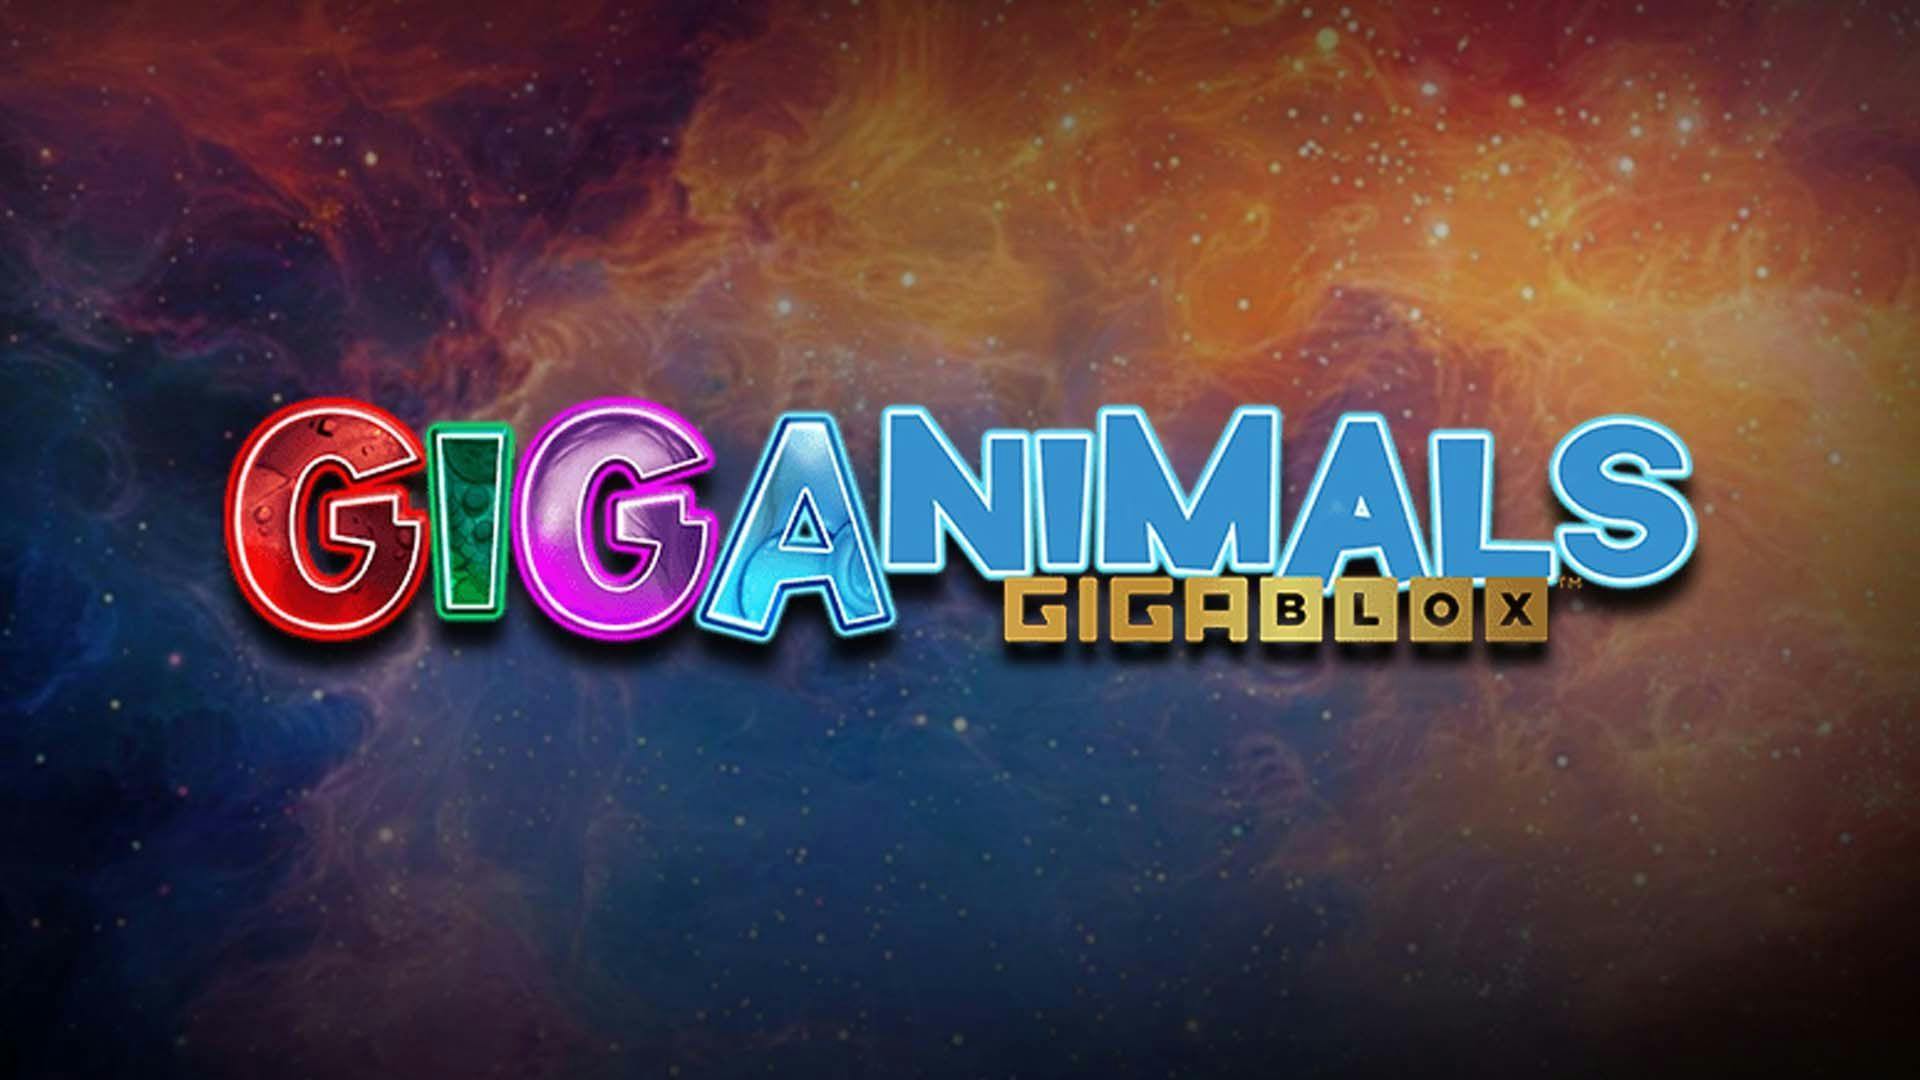 Giganimals Gigablox Slot Machine Online Free Game Play